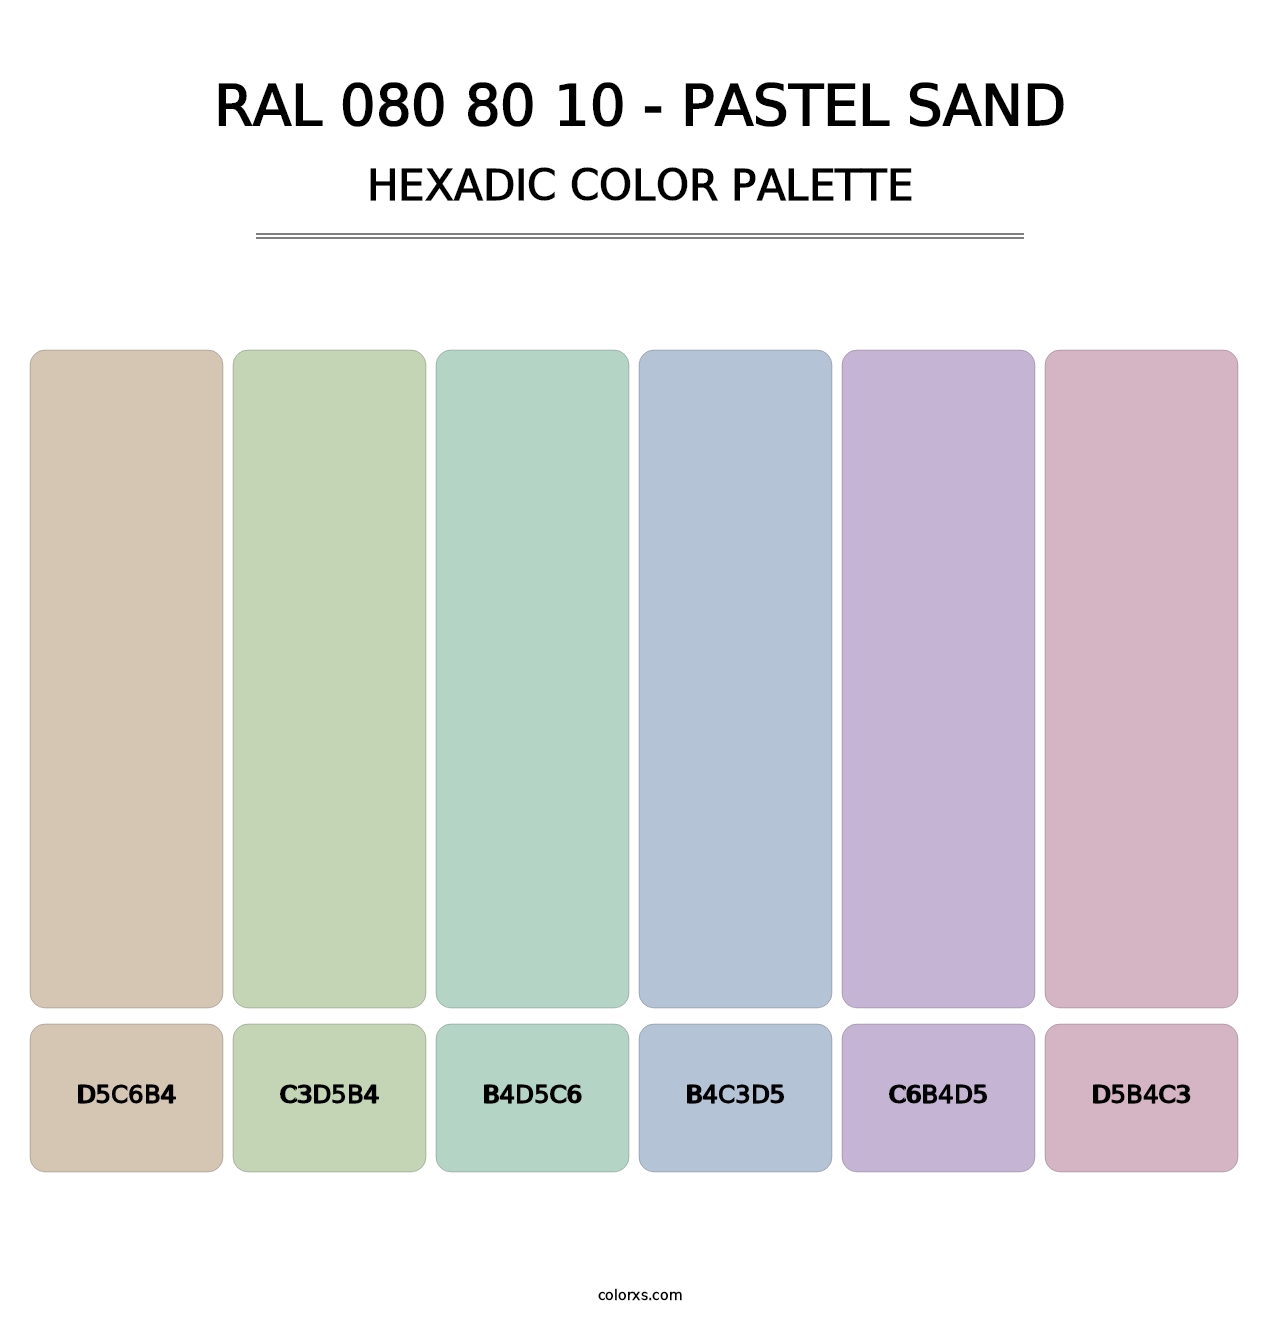 RAL 080 80 10 - Pastel Sand - Hexadic Color Palette